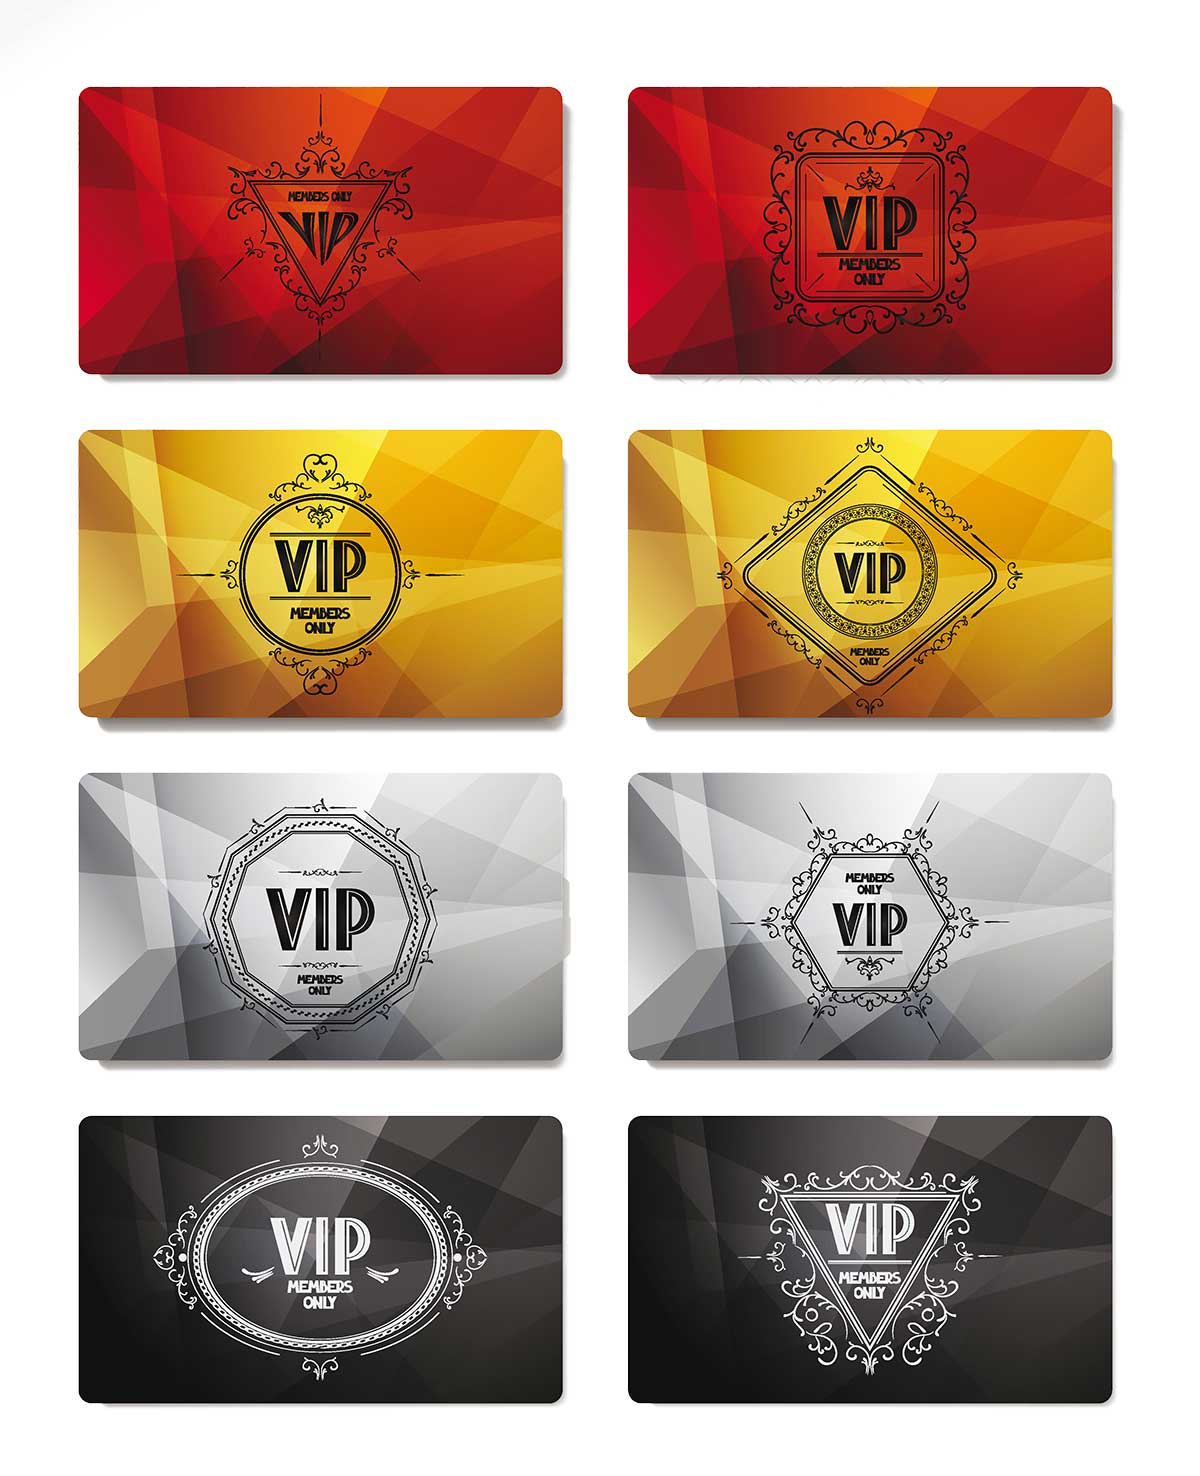 VIP会员卡系列设计.jpg